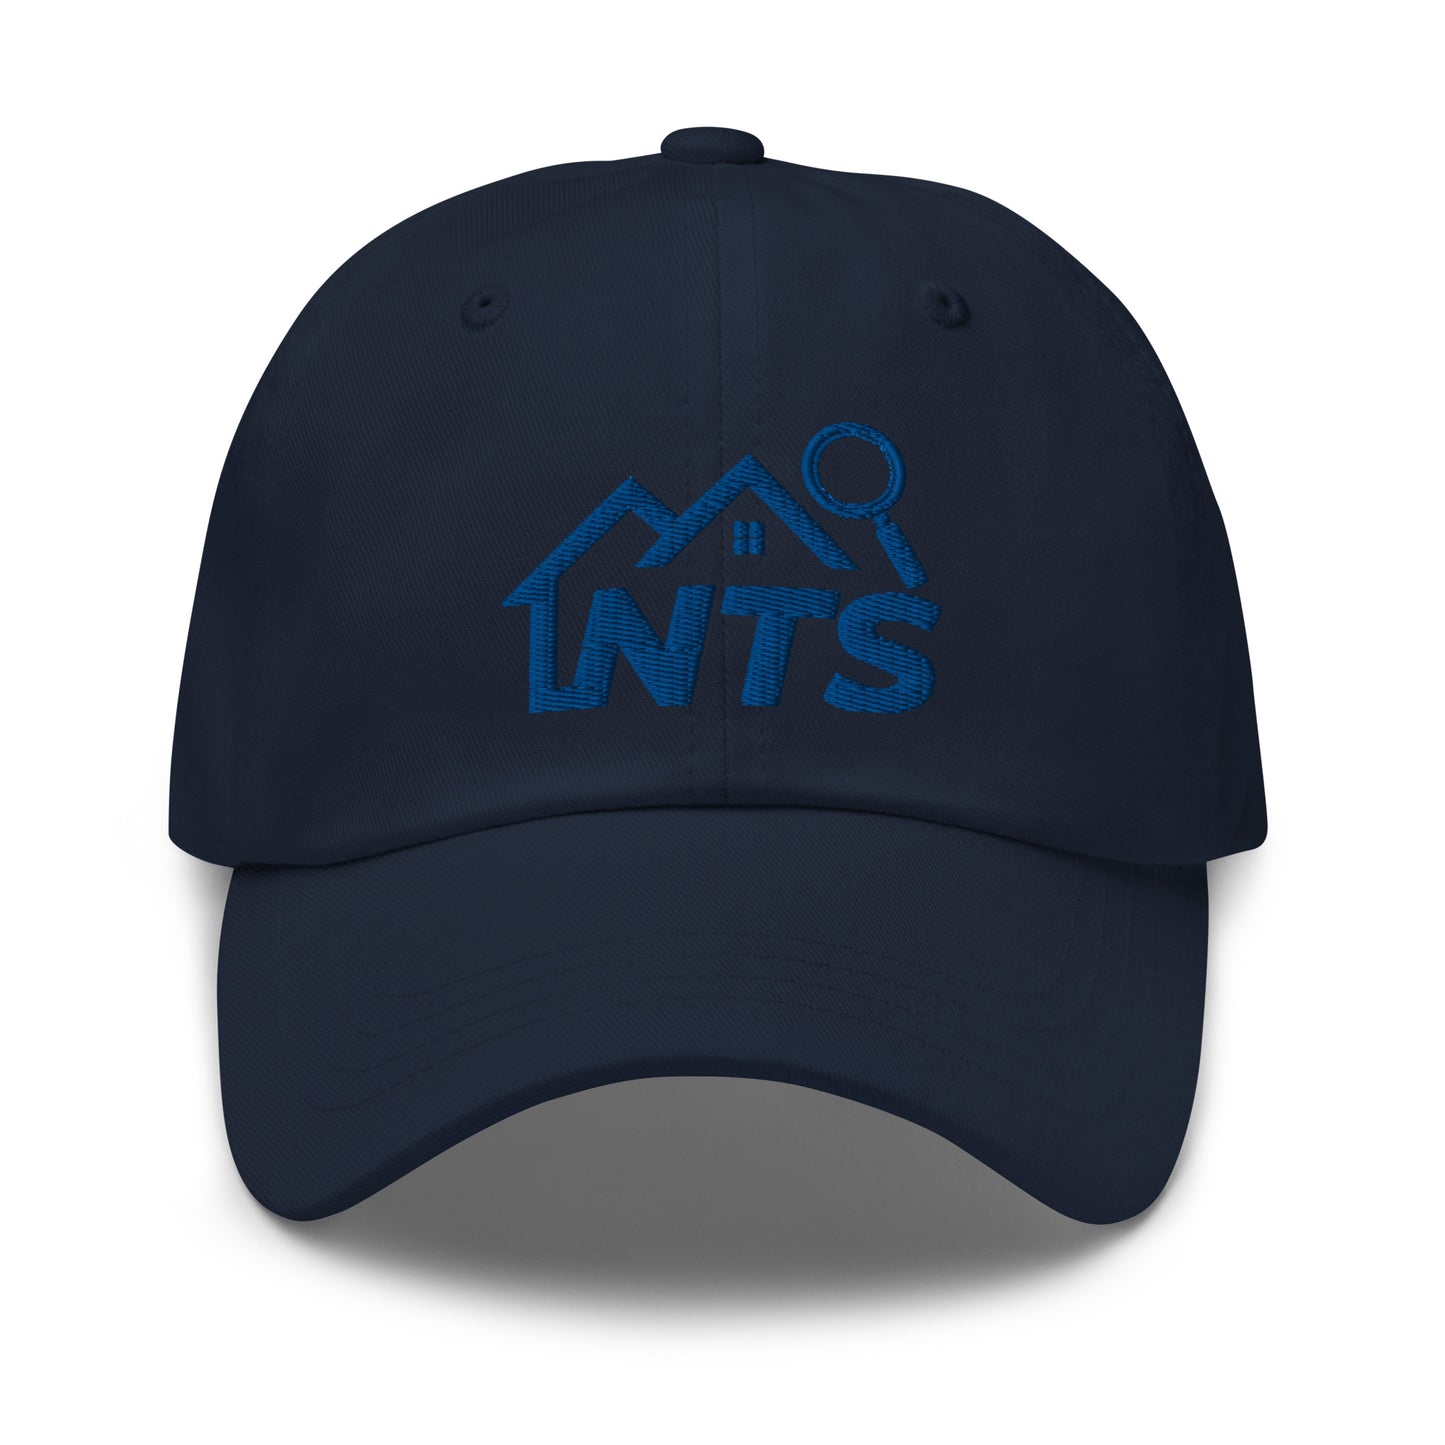 NTS Dad hat